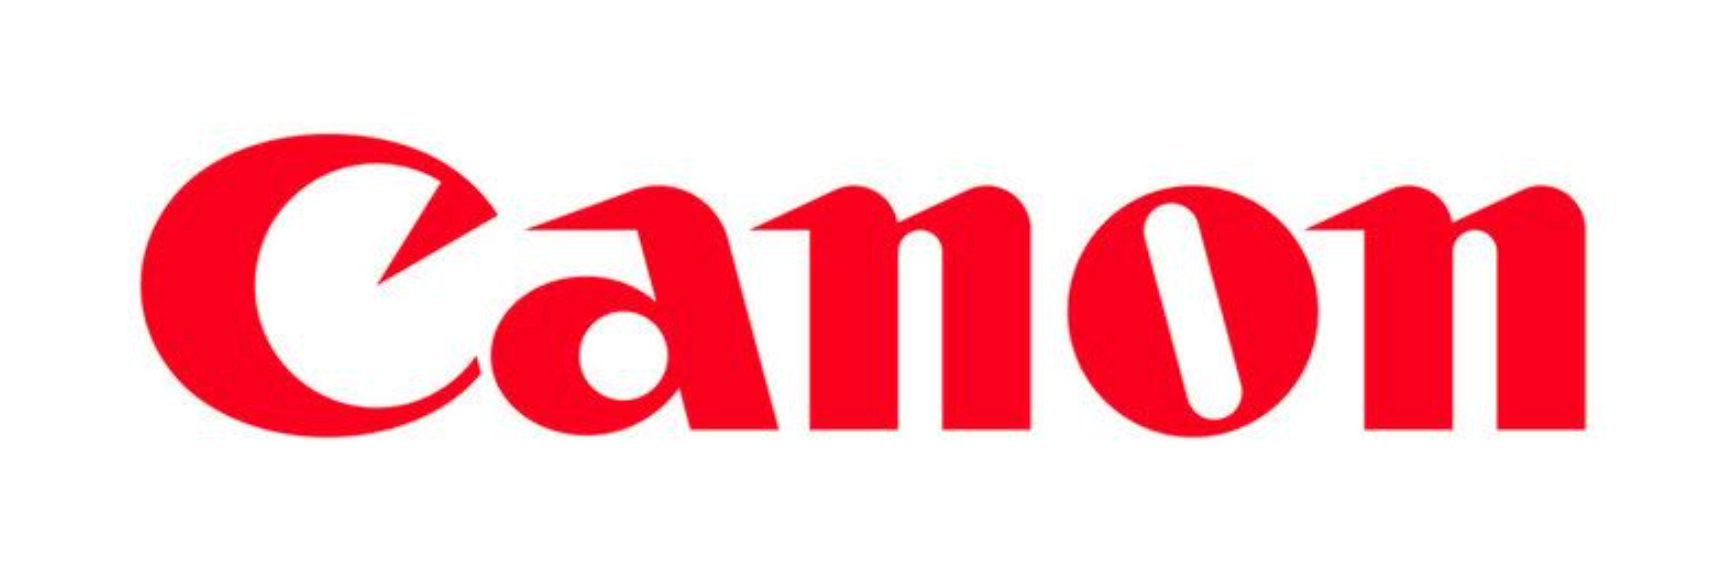 Canon Announces Firm